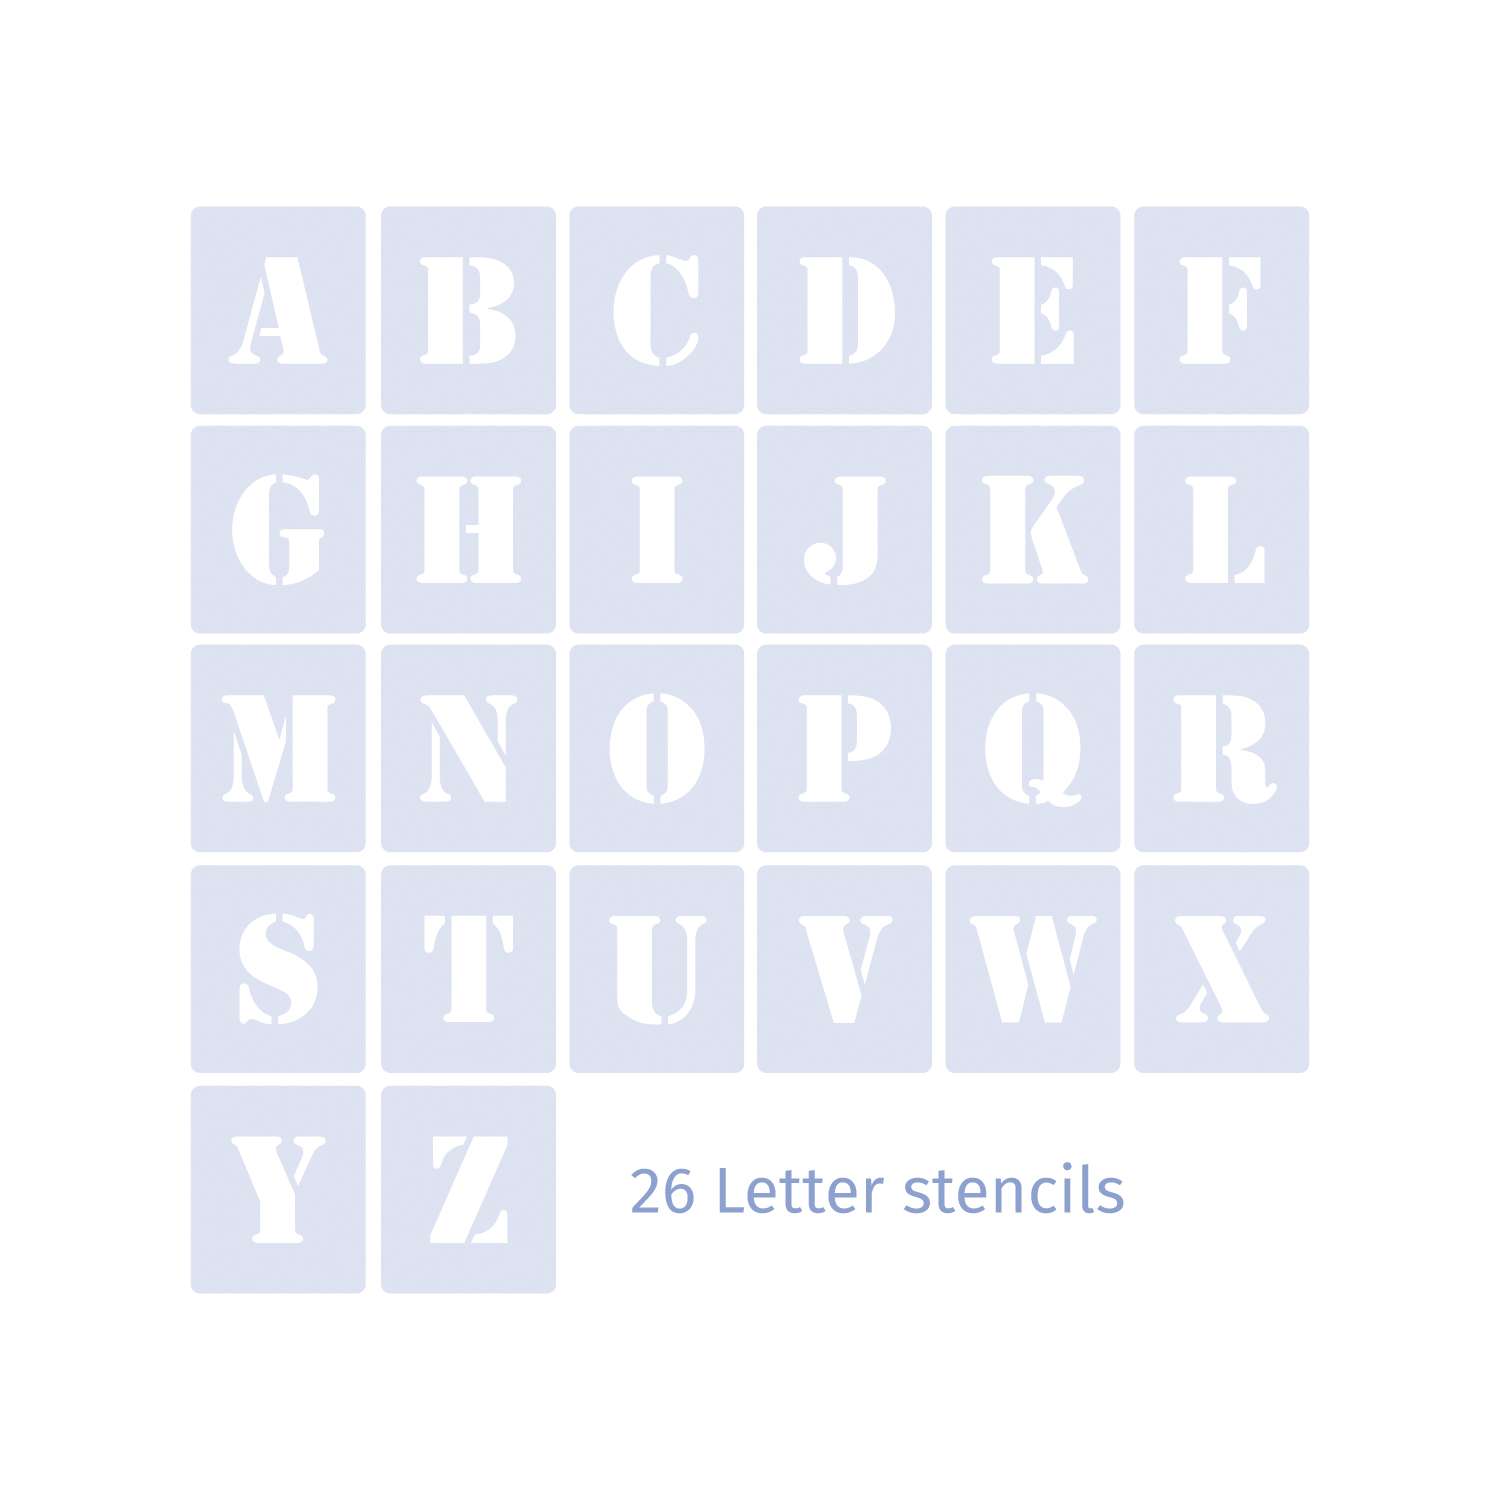 Letter Stencils at QBIX Stencils